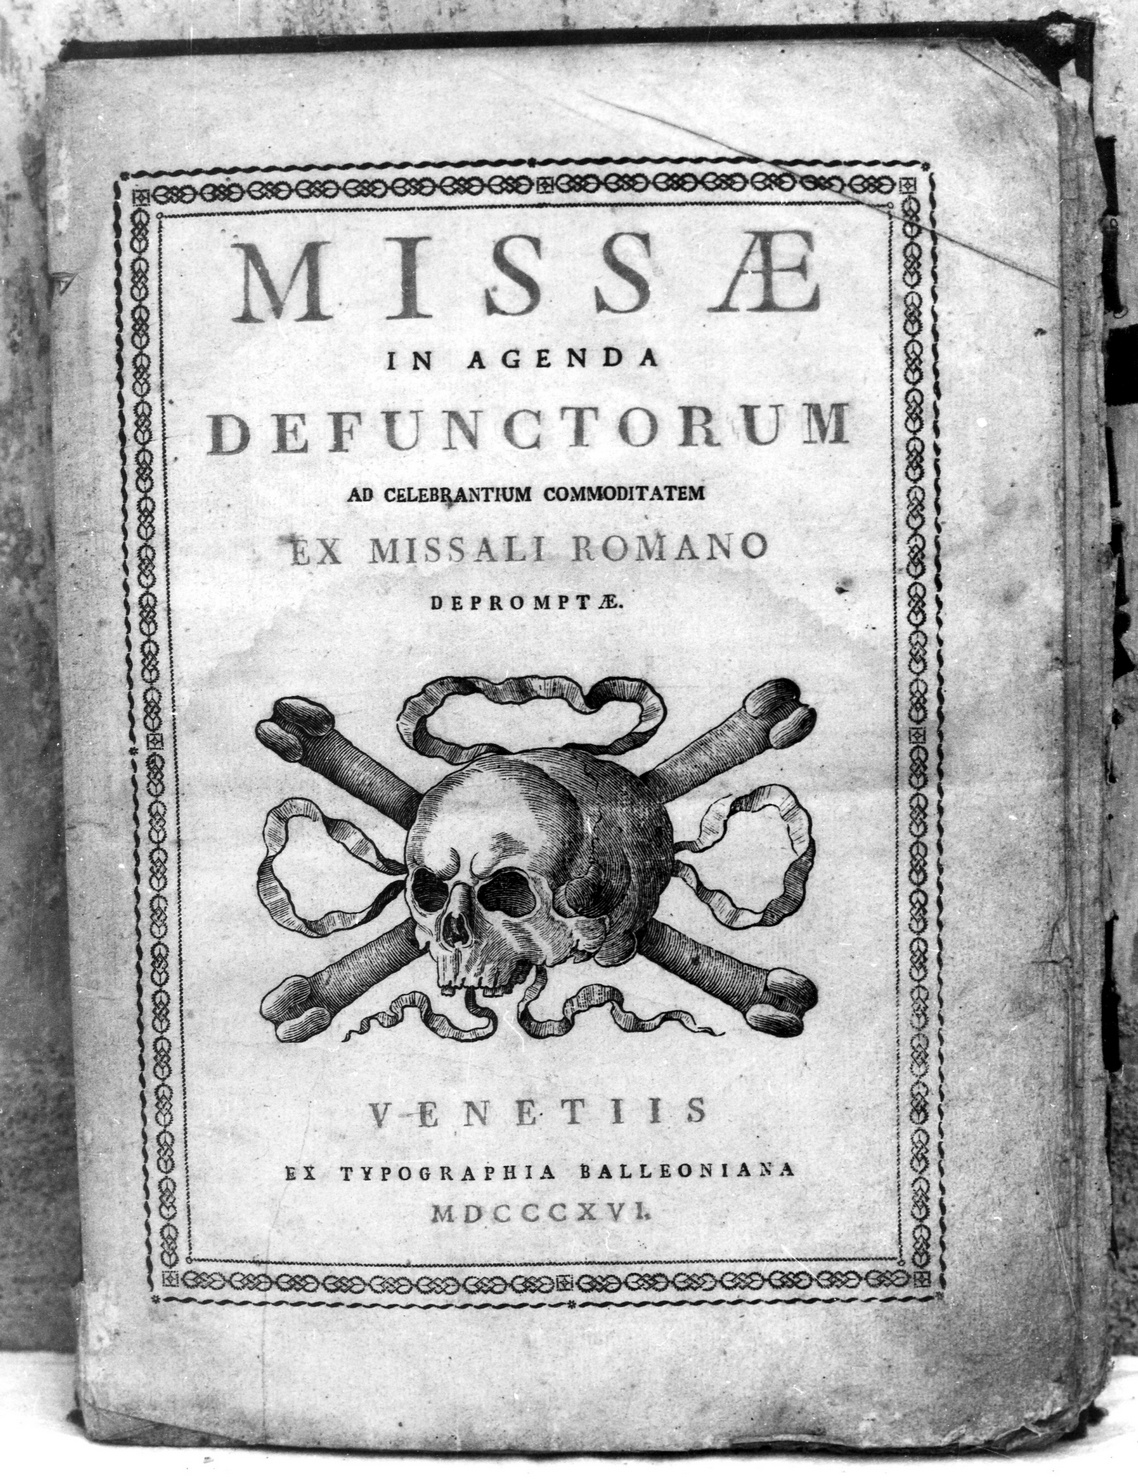 MISSAE DEFUNCTORUM, teschio (stampa) - ambito veneziano (primo quarto sec. XIX)